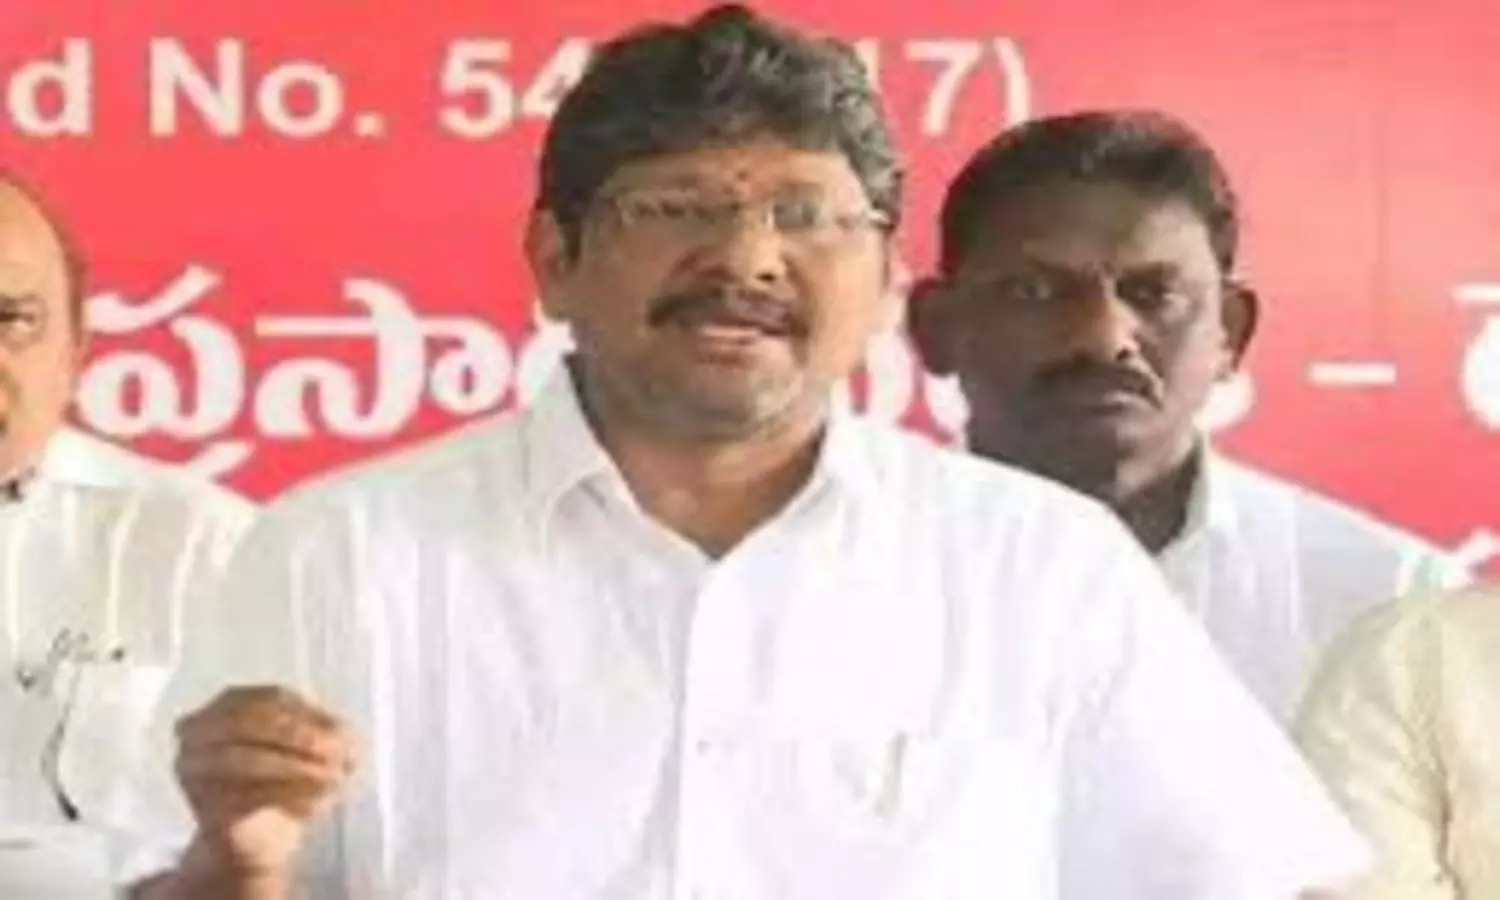 Government should pay dues immediately: Employees leader Bopparaju Venkateshwarlu